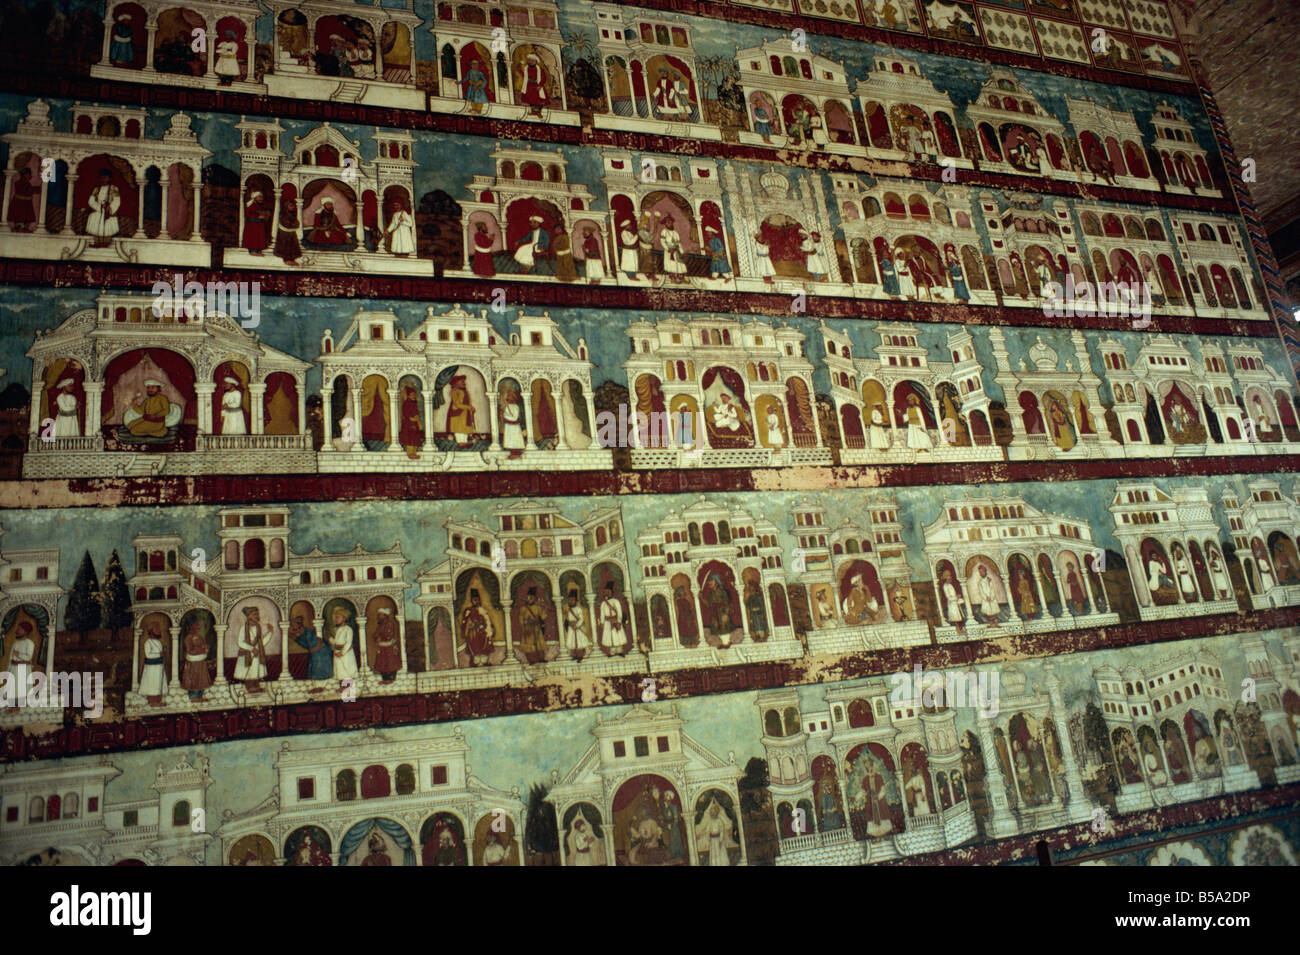 Wandbilder im Palast Tipu Sultans s Seringapatam Mysore Karnataka Staat Indien Asien Stockfoto